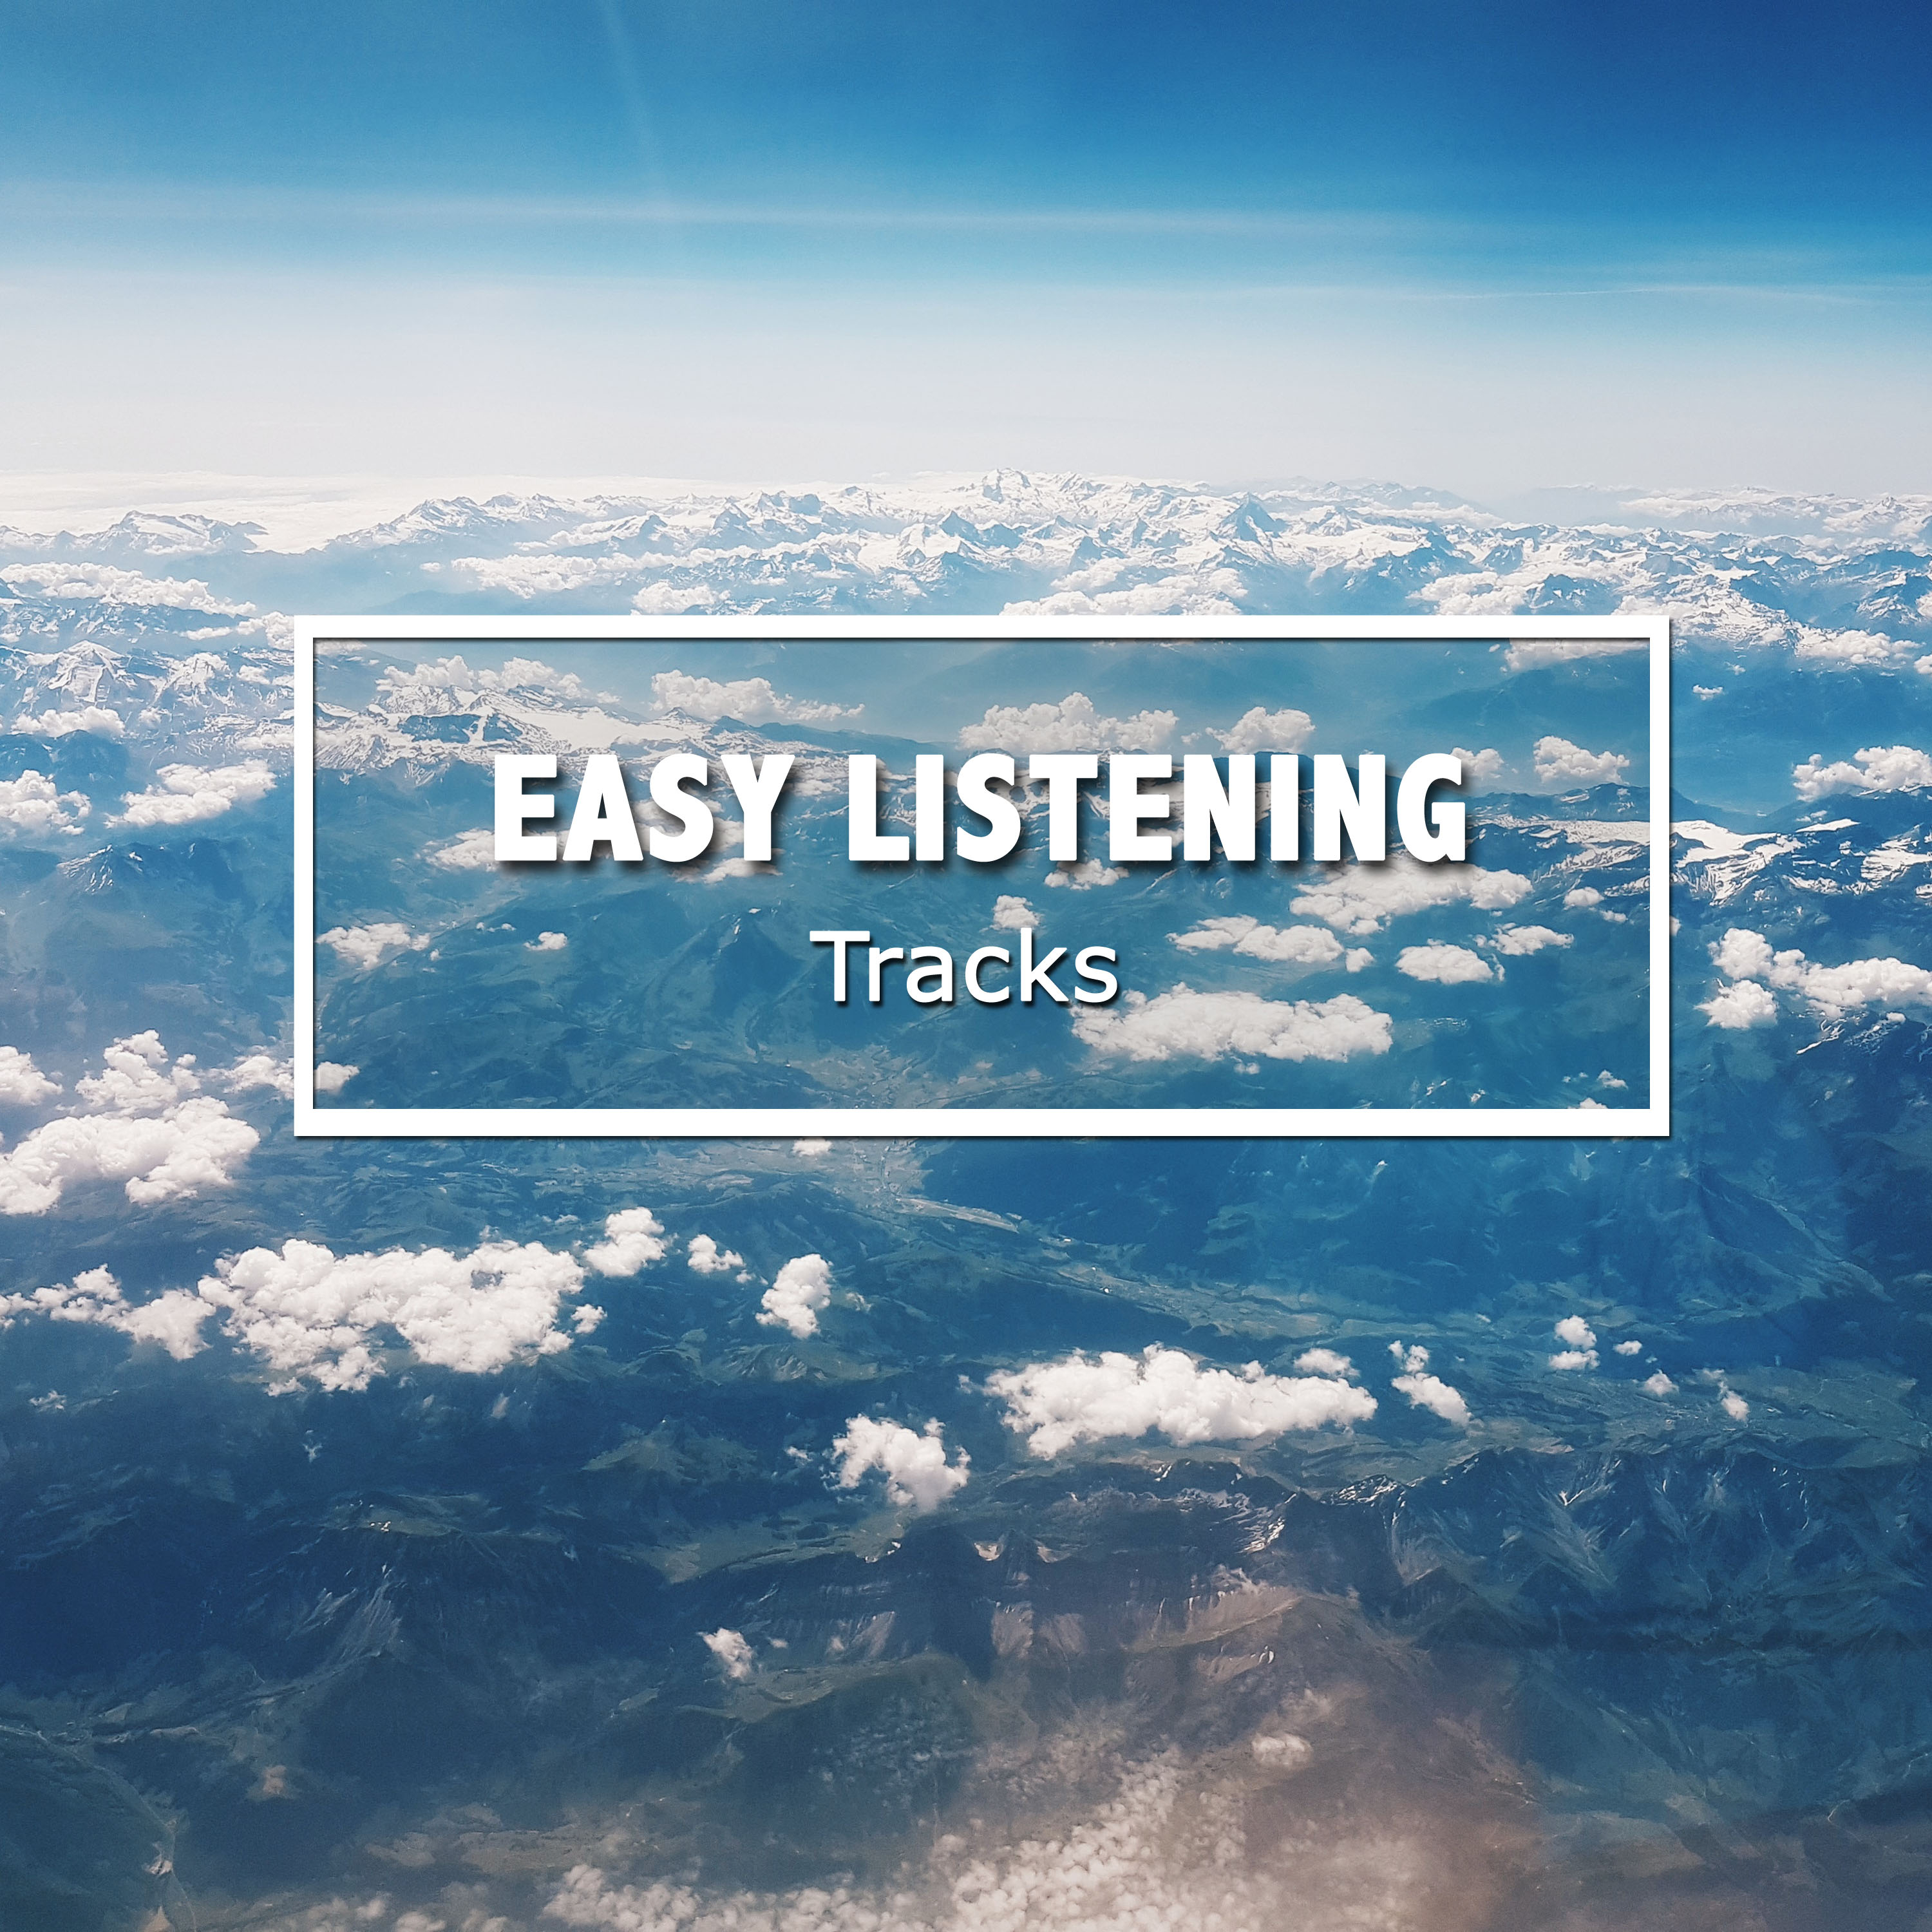 #19 Easy Listening Tracks to Aid Meditation & Find Calm